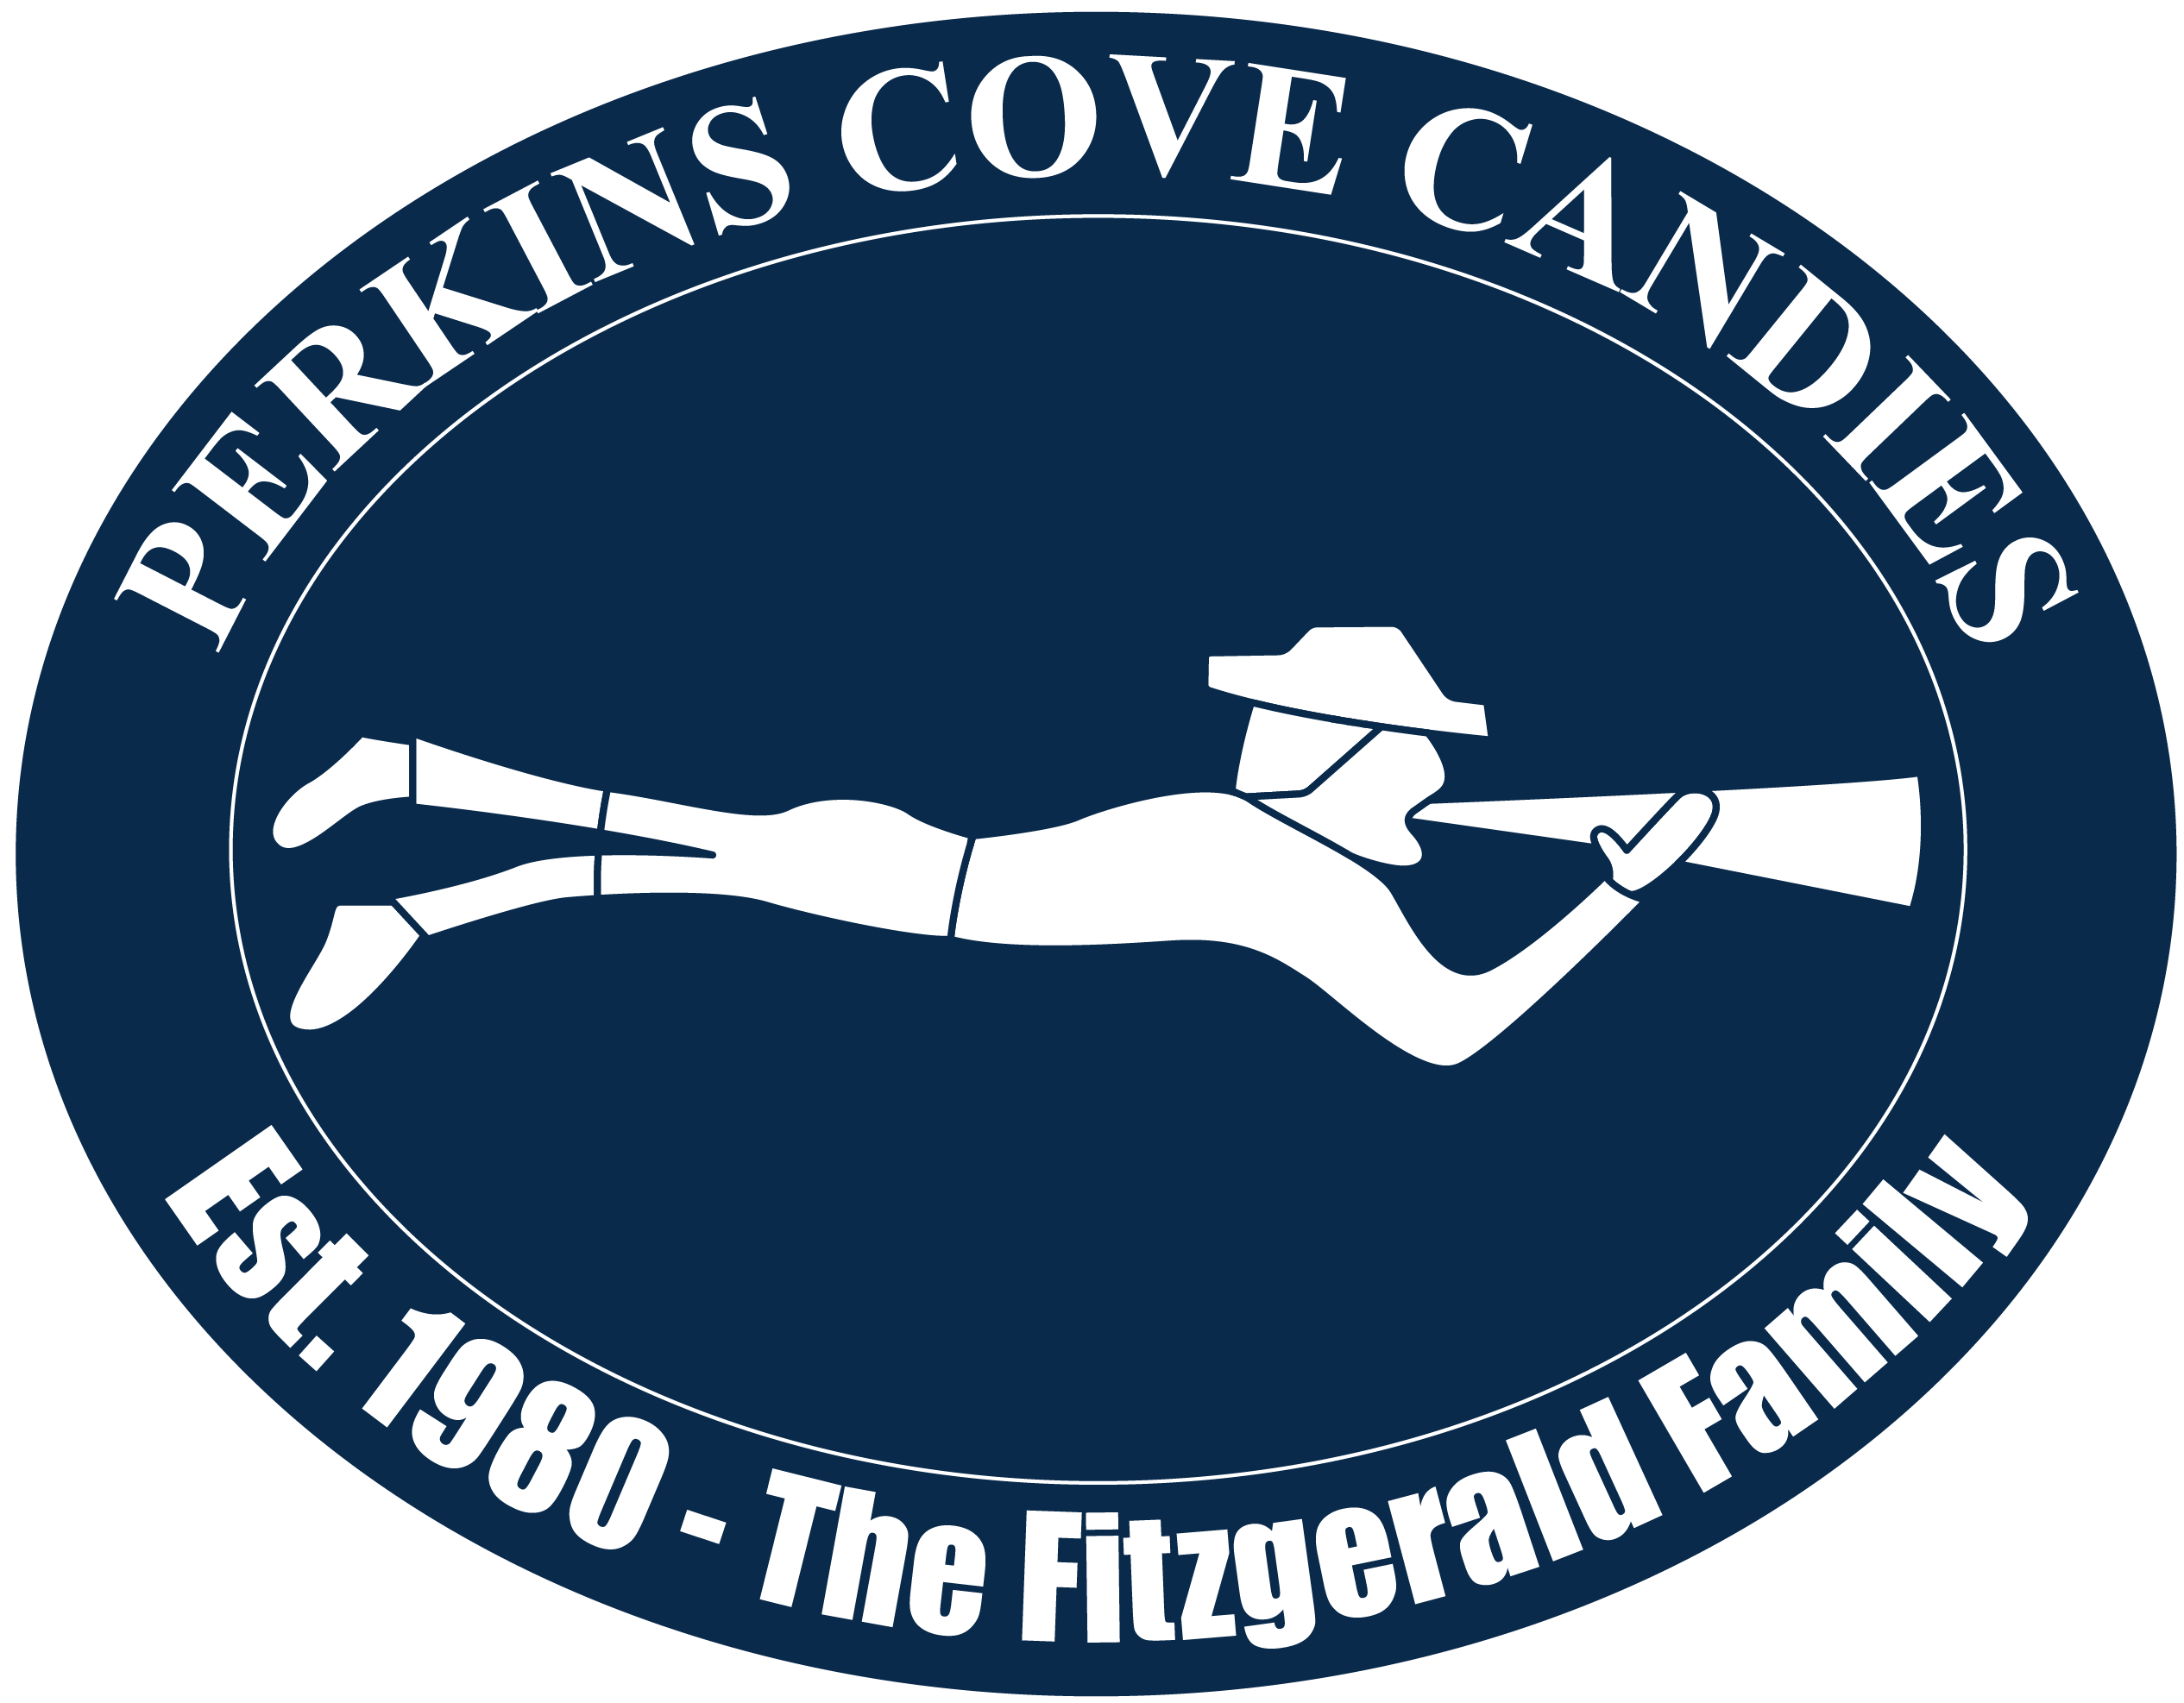 Perkins Cove Candies